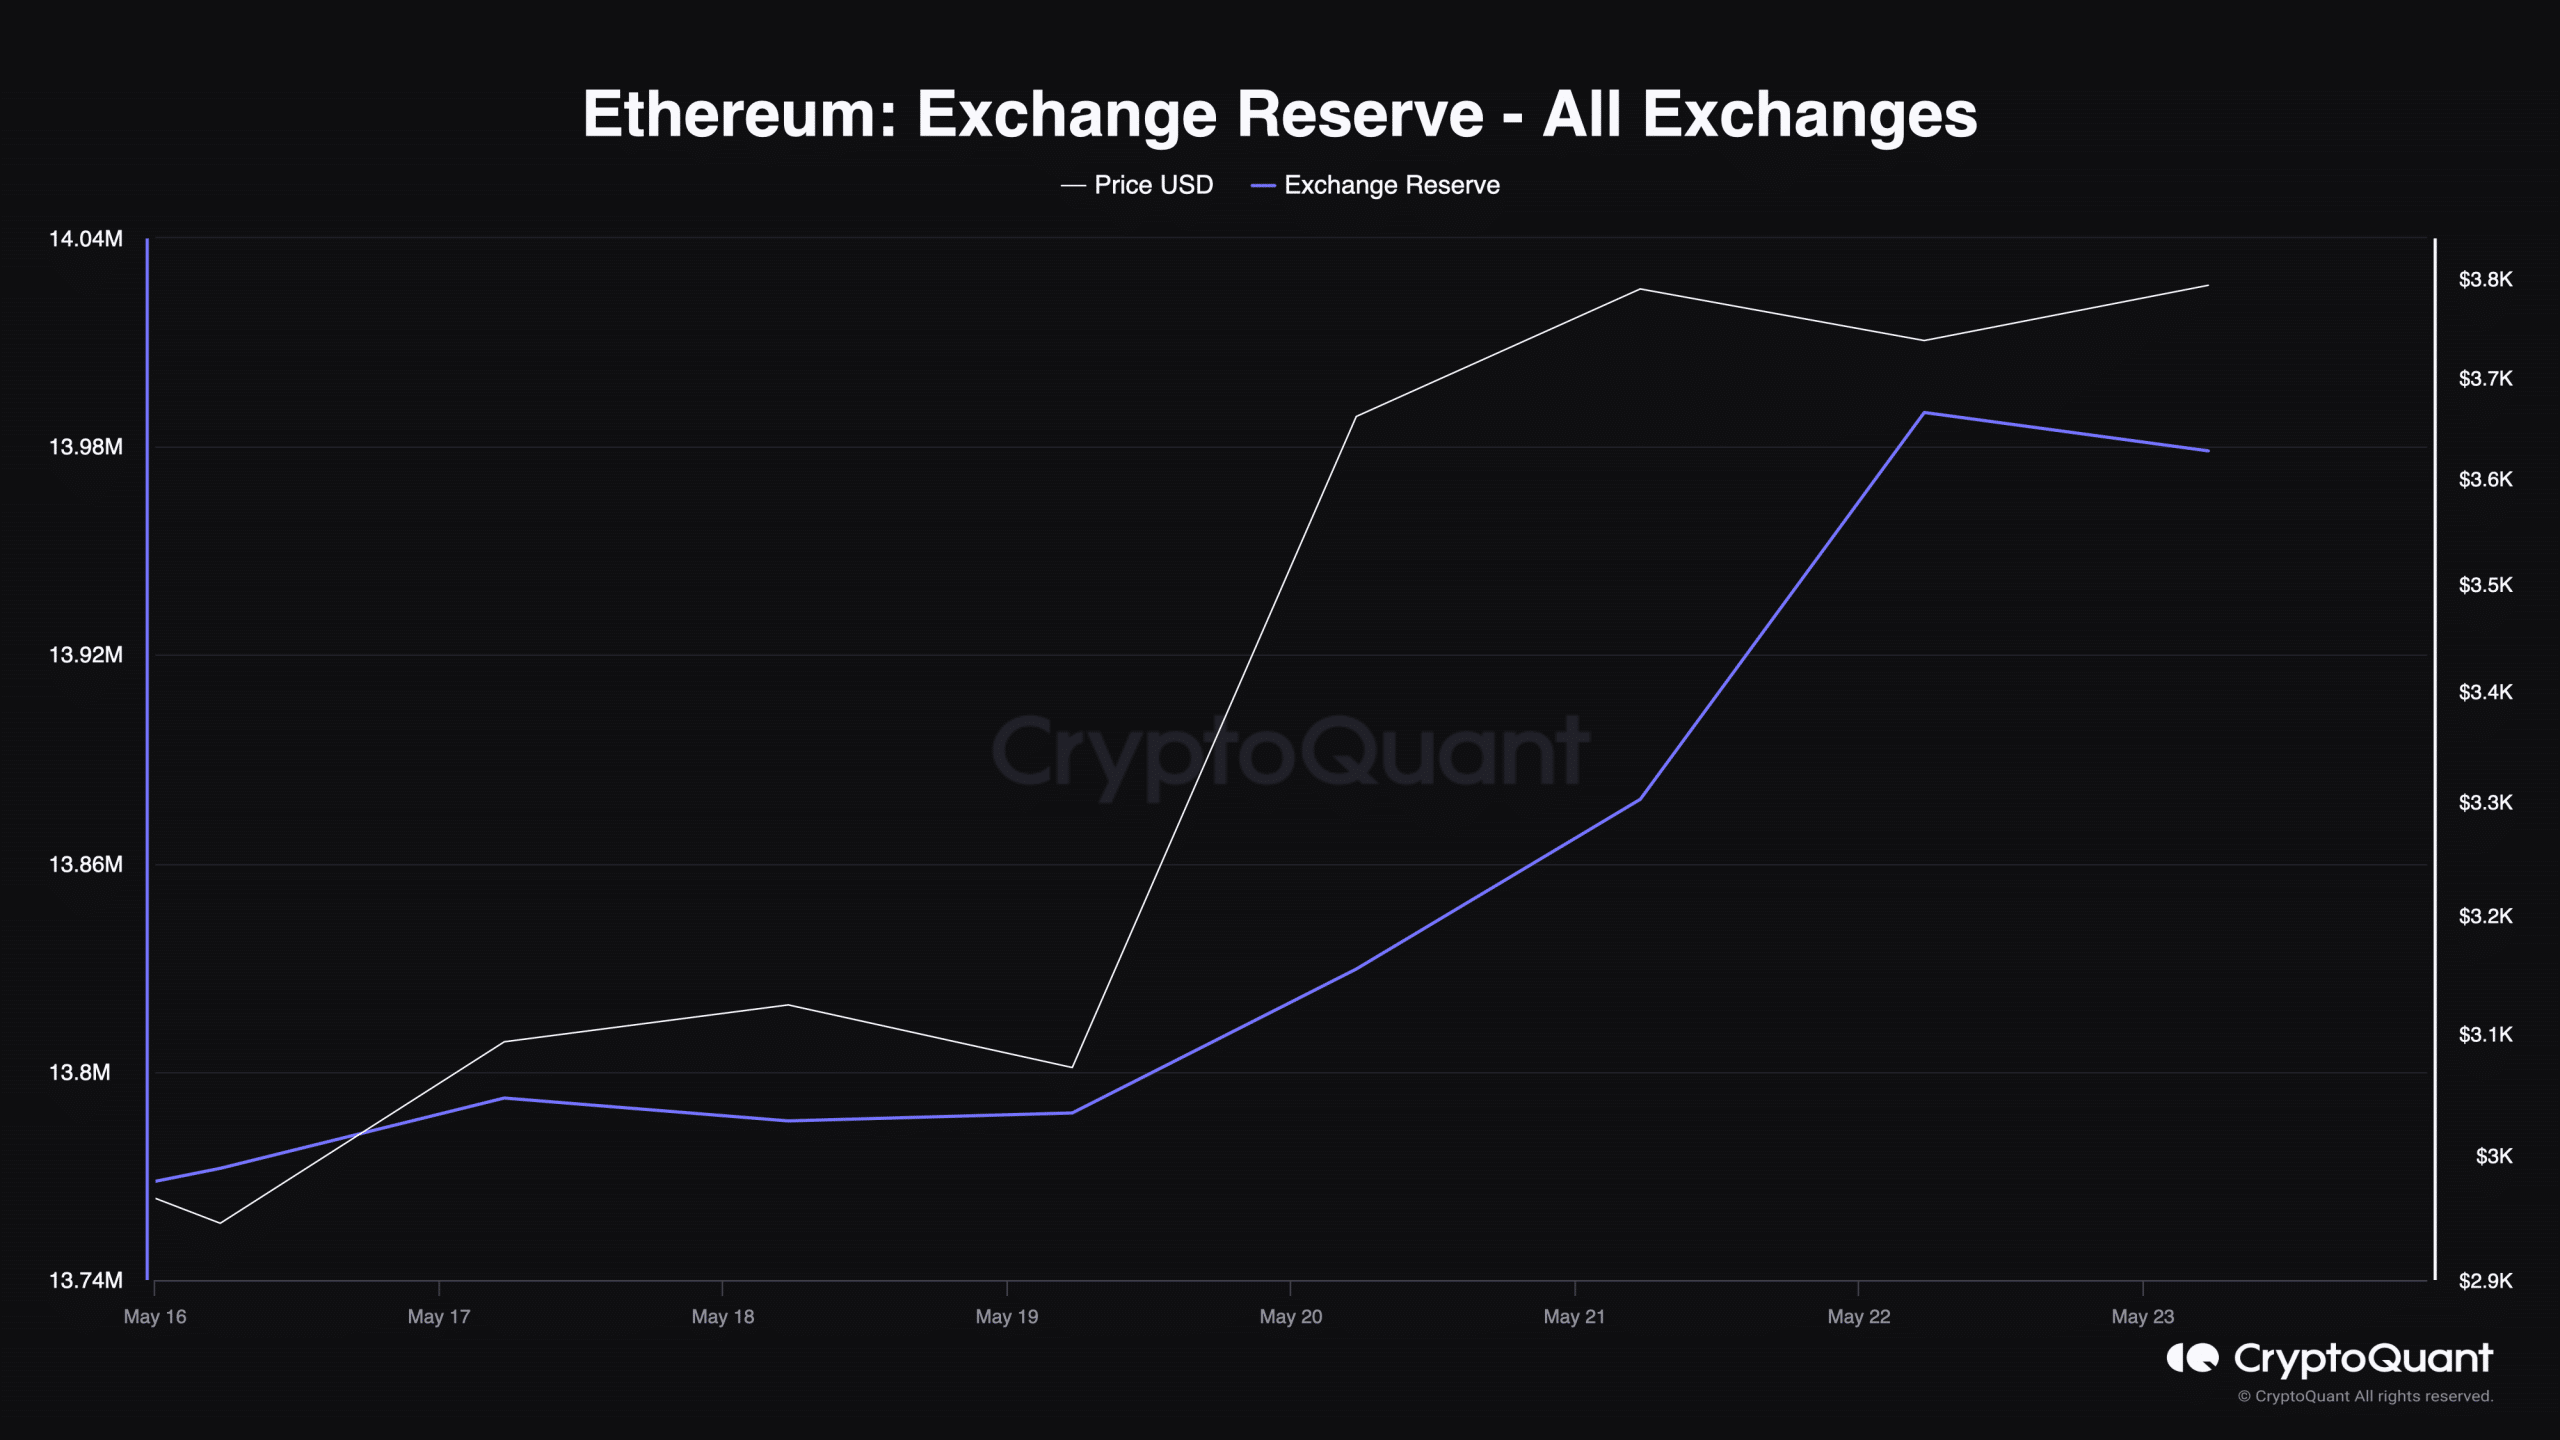 ETH's exchange reserve declined slightly 